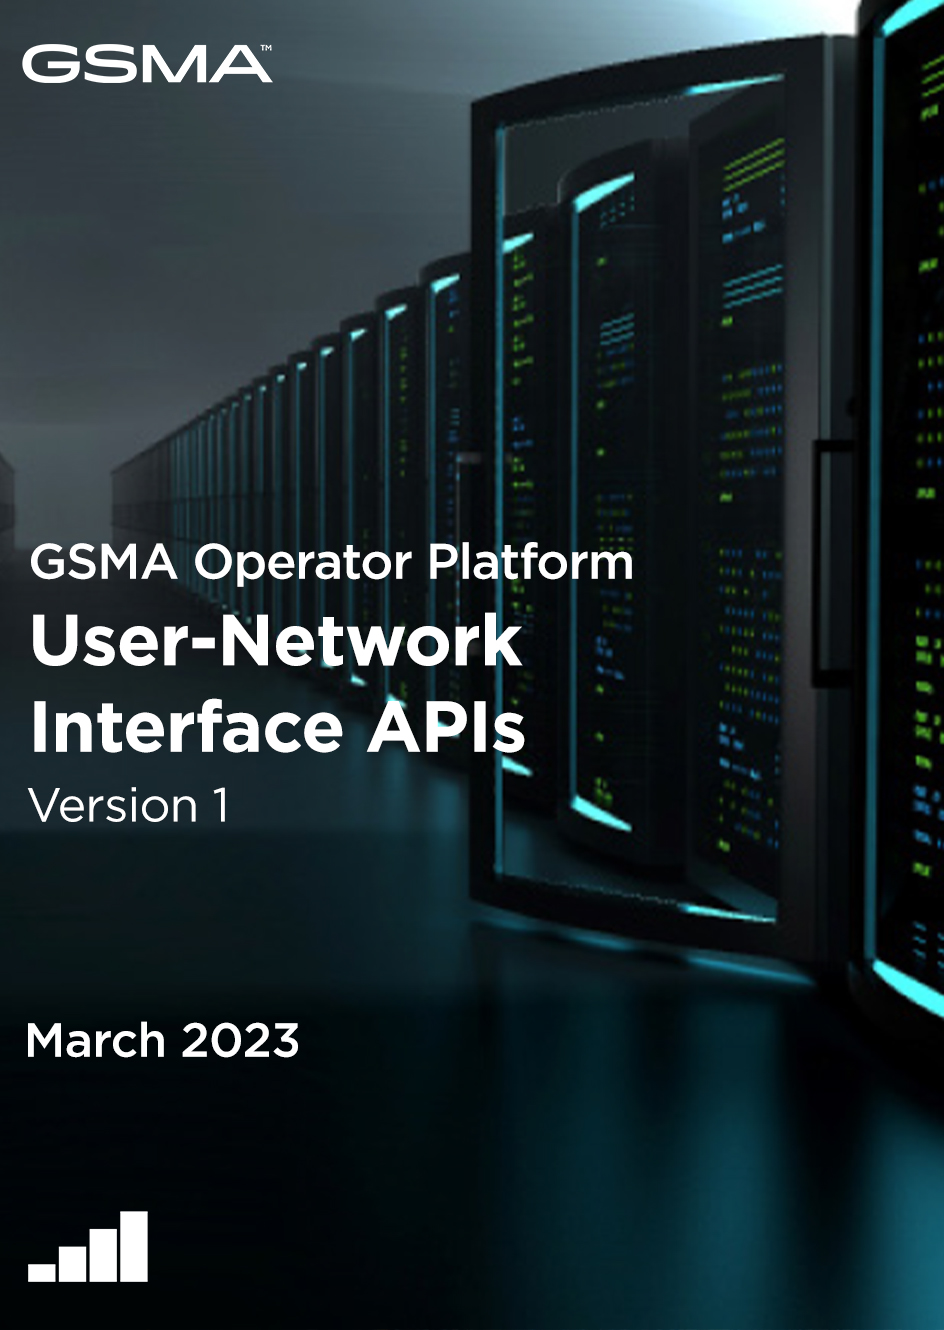 GSMA Operator Platform Group – User-Network Interface APIs image